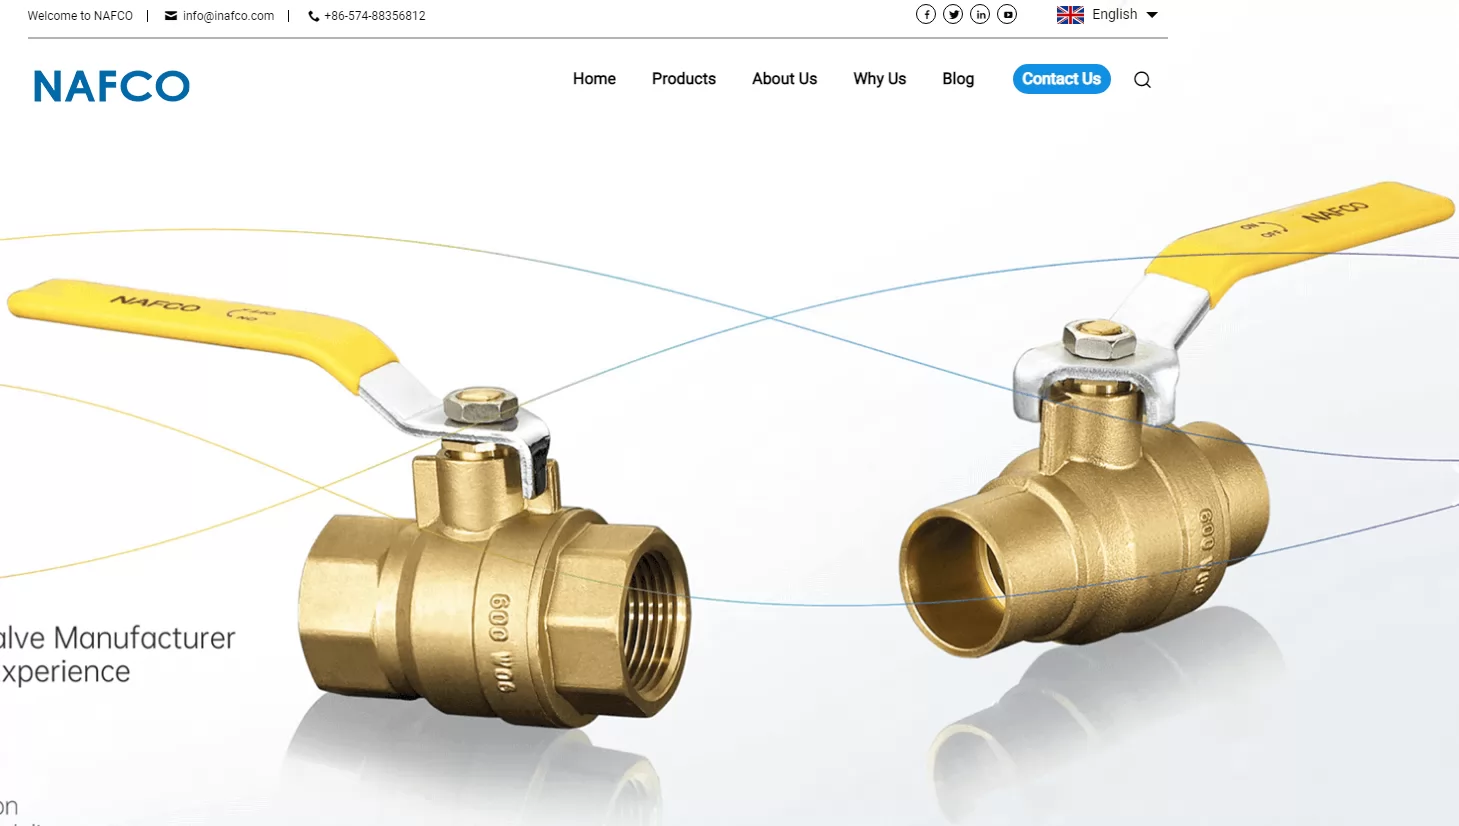 NAFCO brass valve